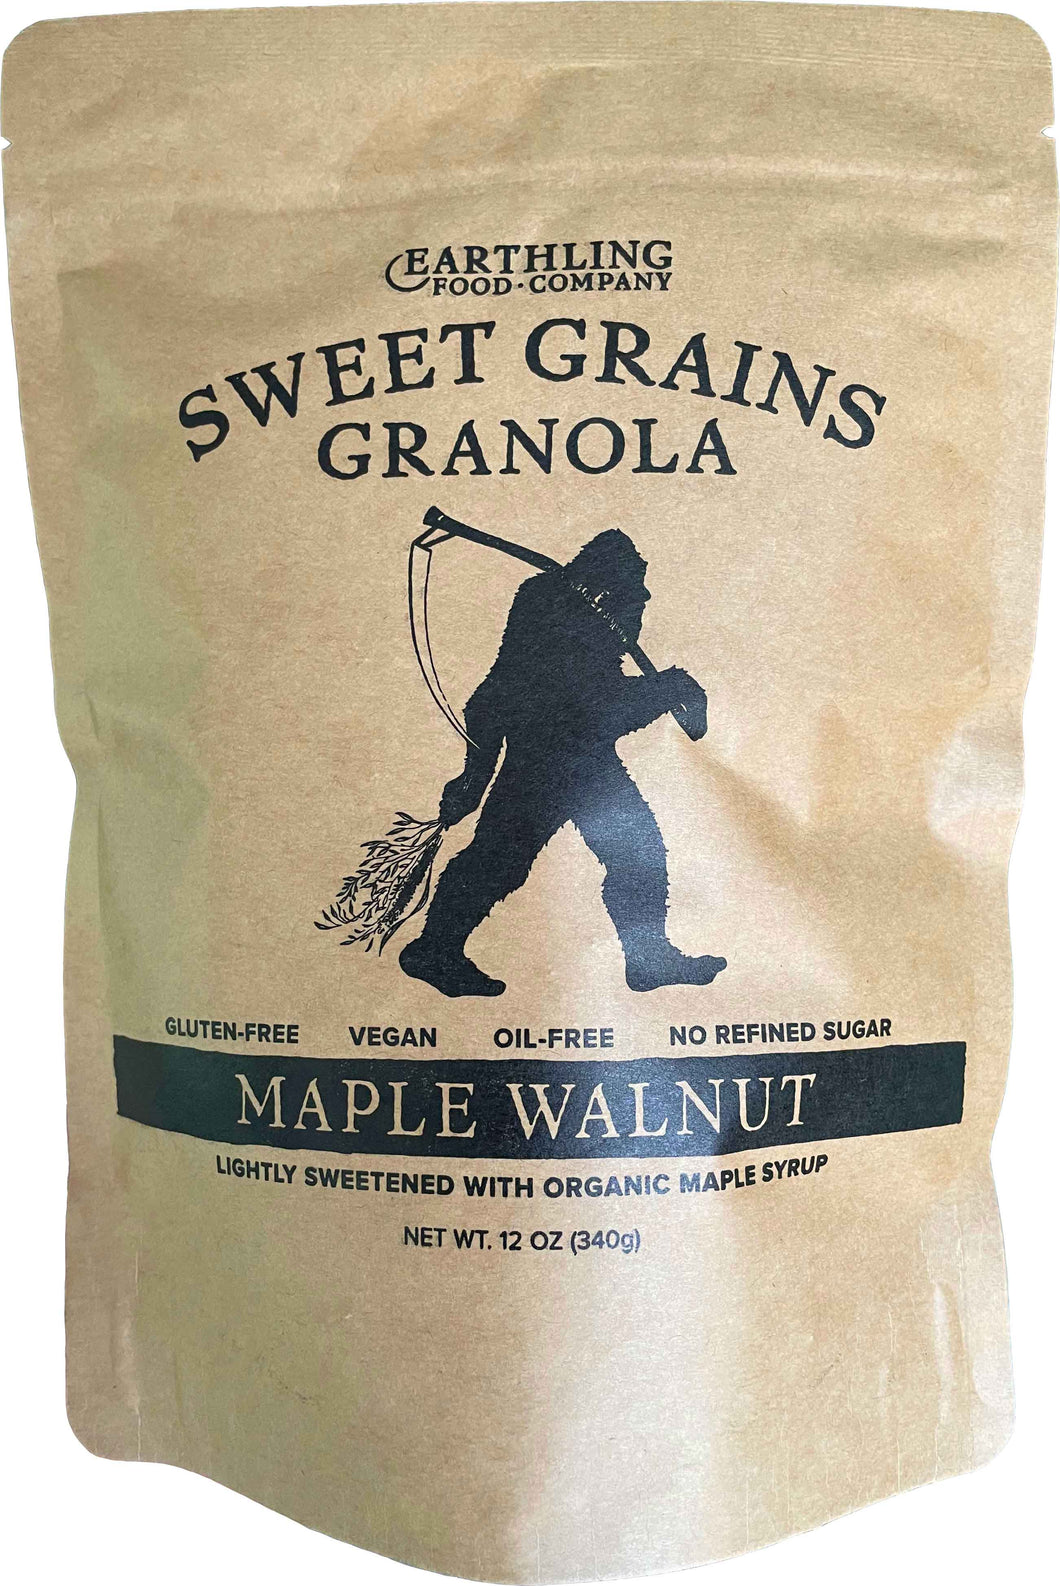 Maple Walnut Sweet Grains Granola, 12 oz